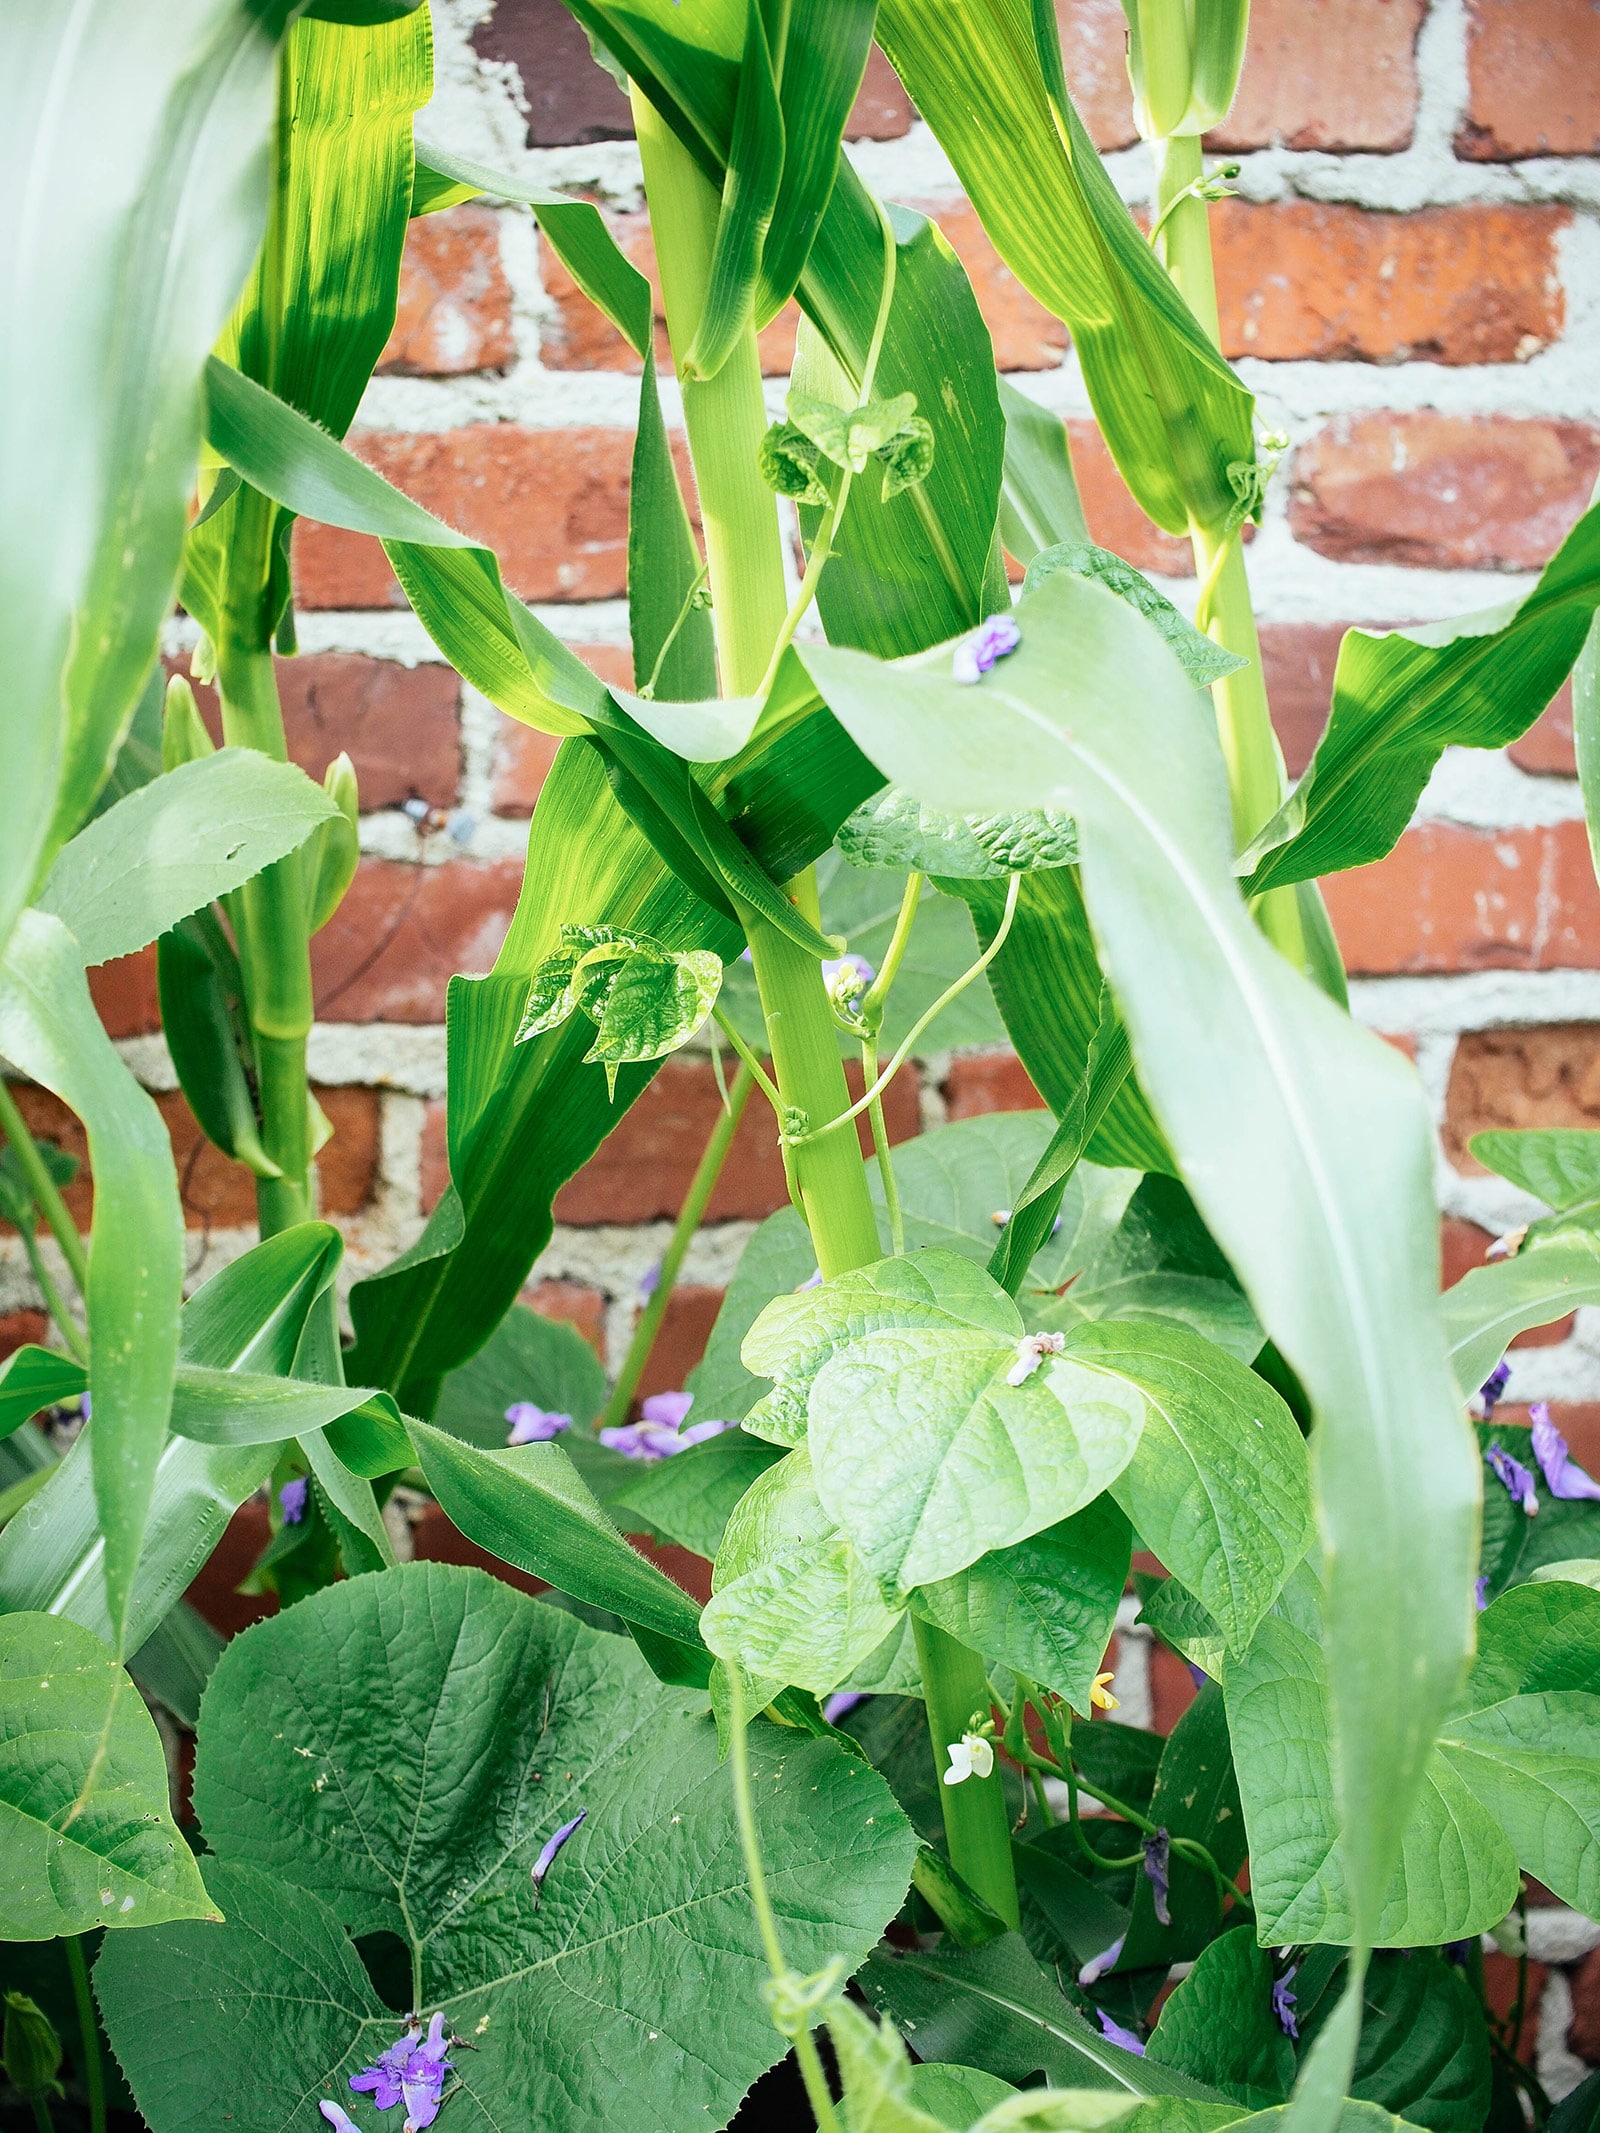 Beans help stabilize top-heavy corn stalks